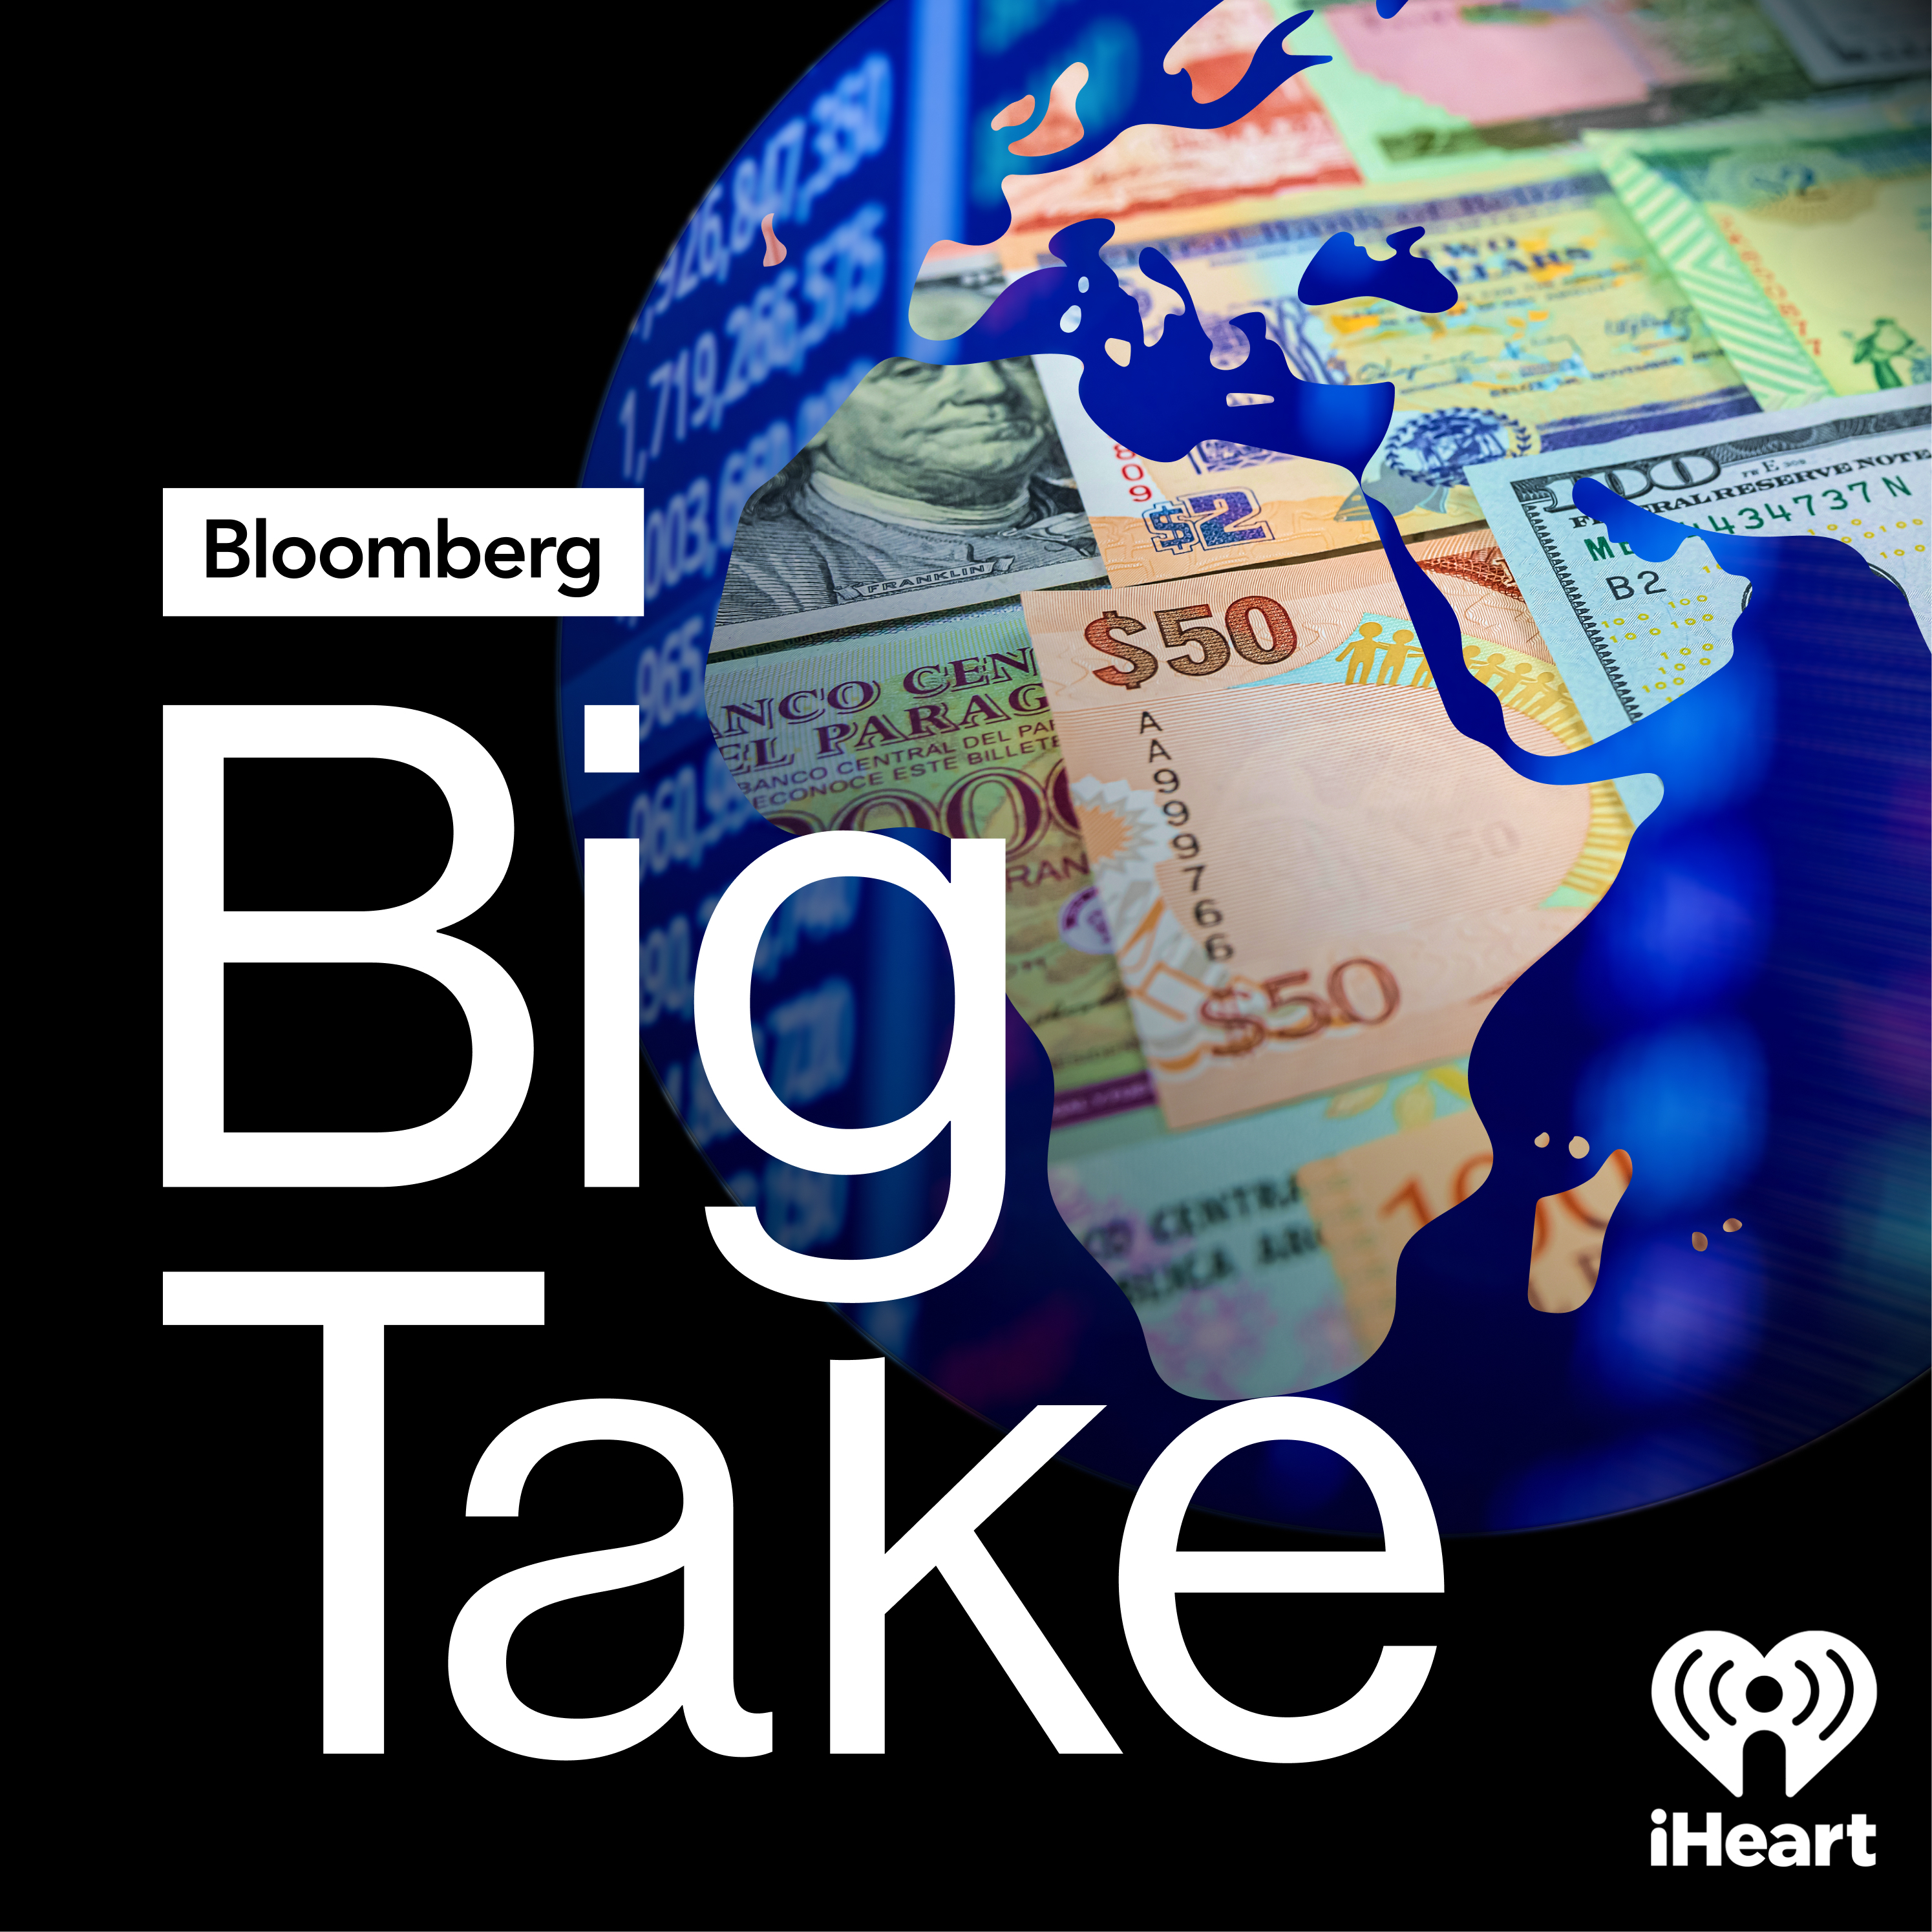 ‘Bluey’: A Blue Heeler Worth $2 Billion With an Uncertain Future